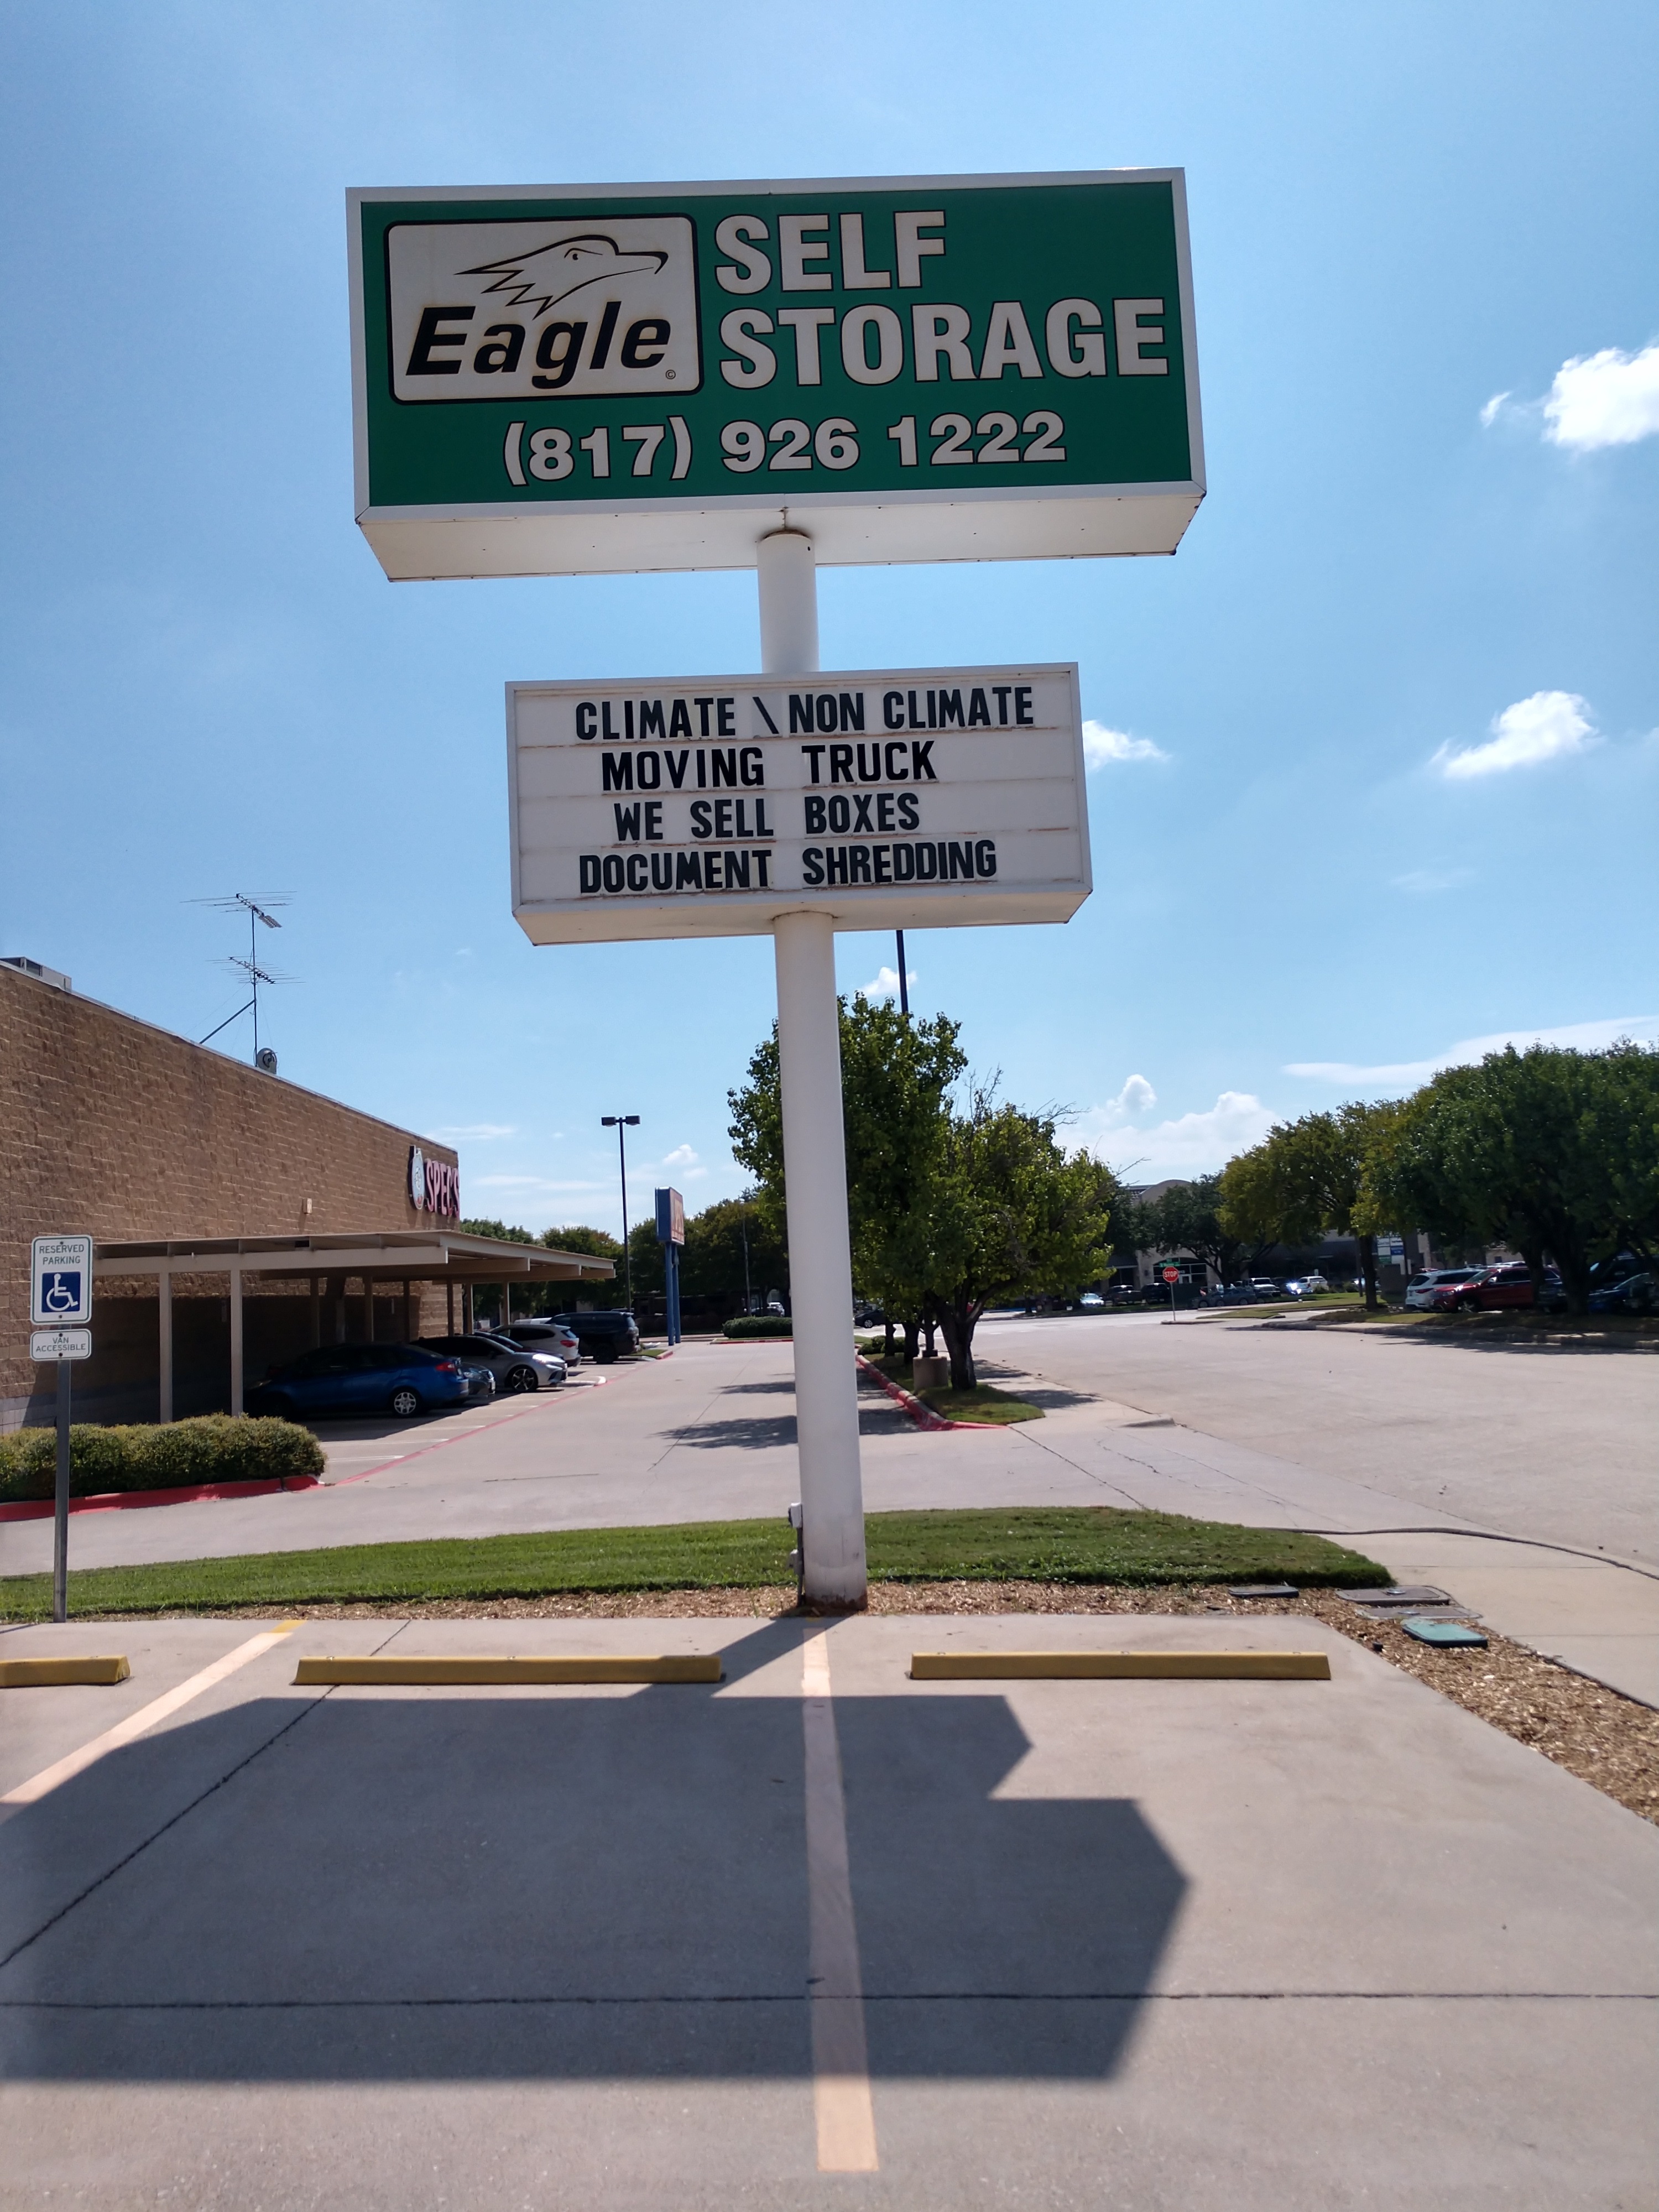 eagle self storage plenty of parking onsite